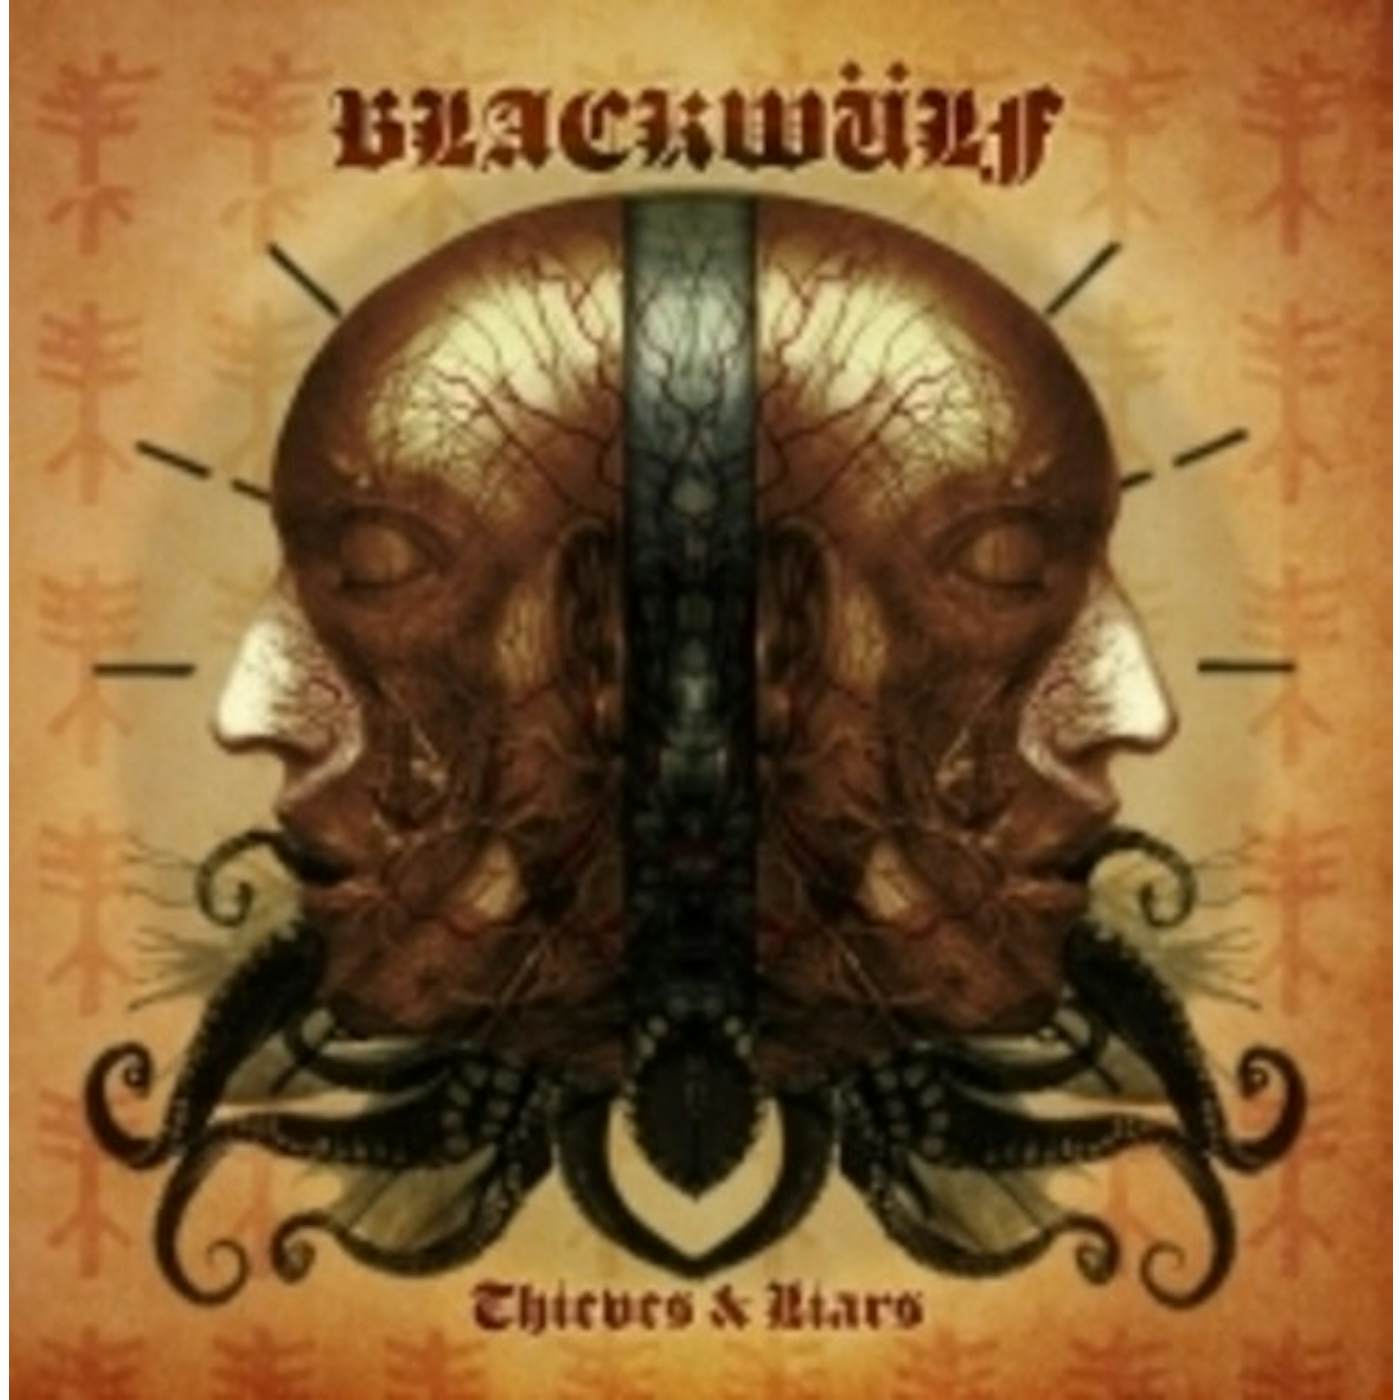 Blackwülf THIEVES AND LIARS CD